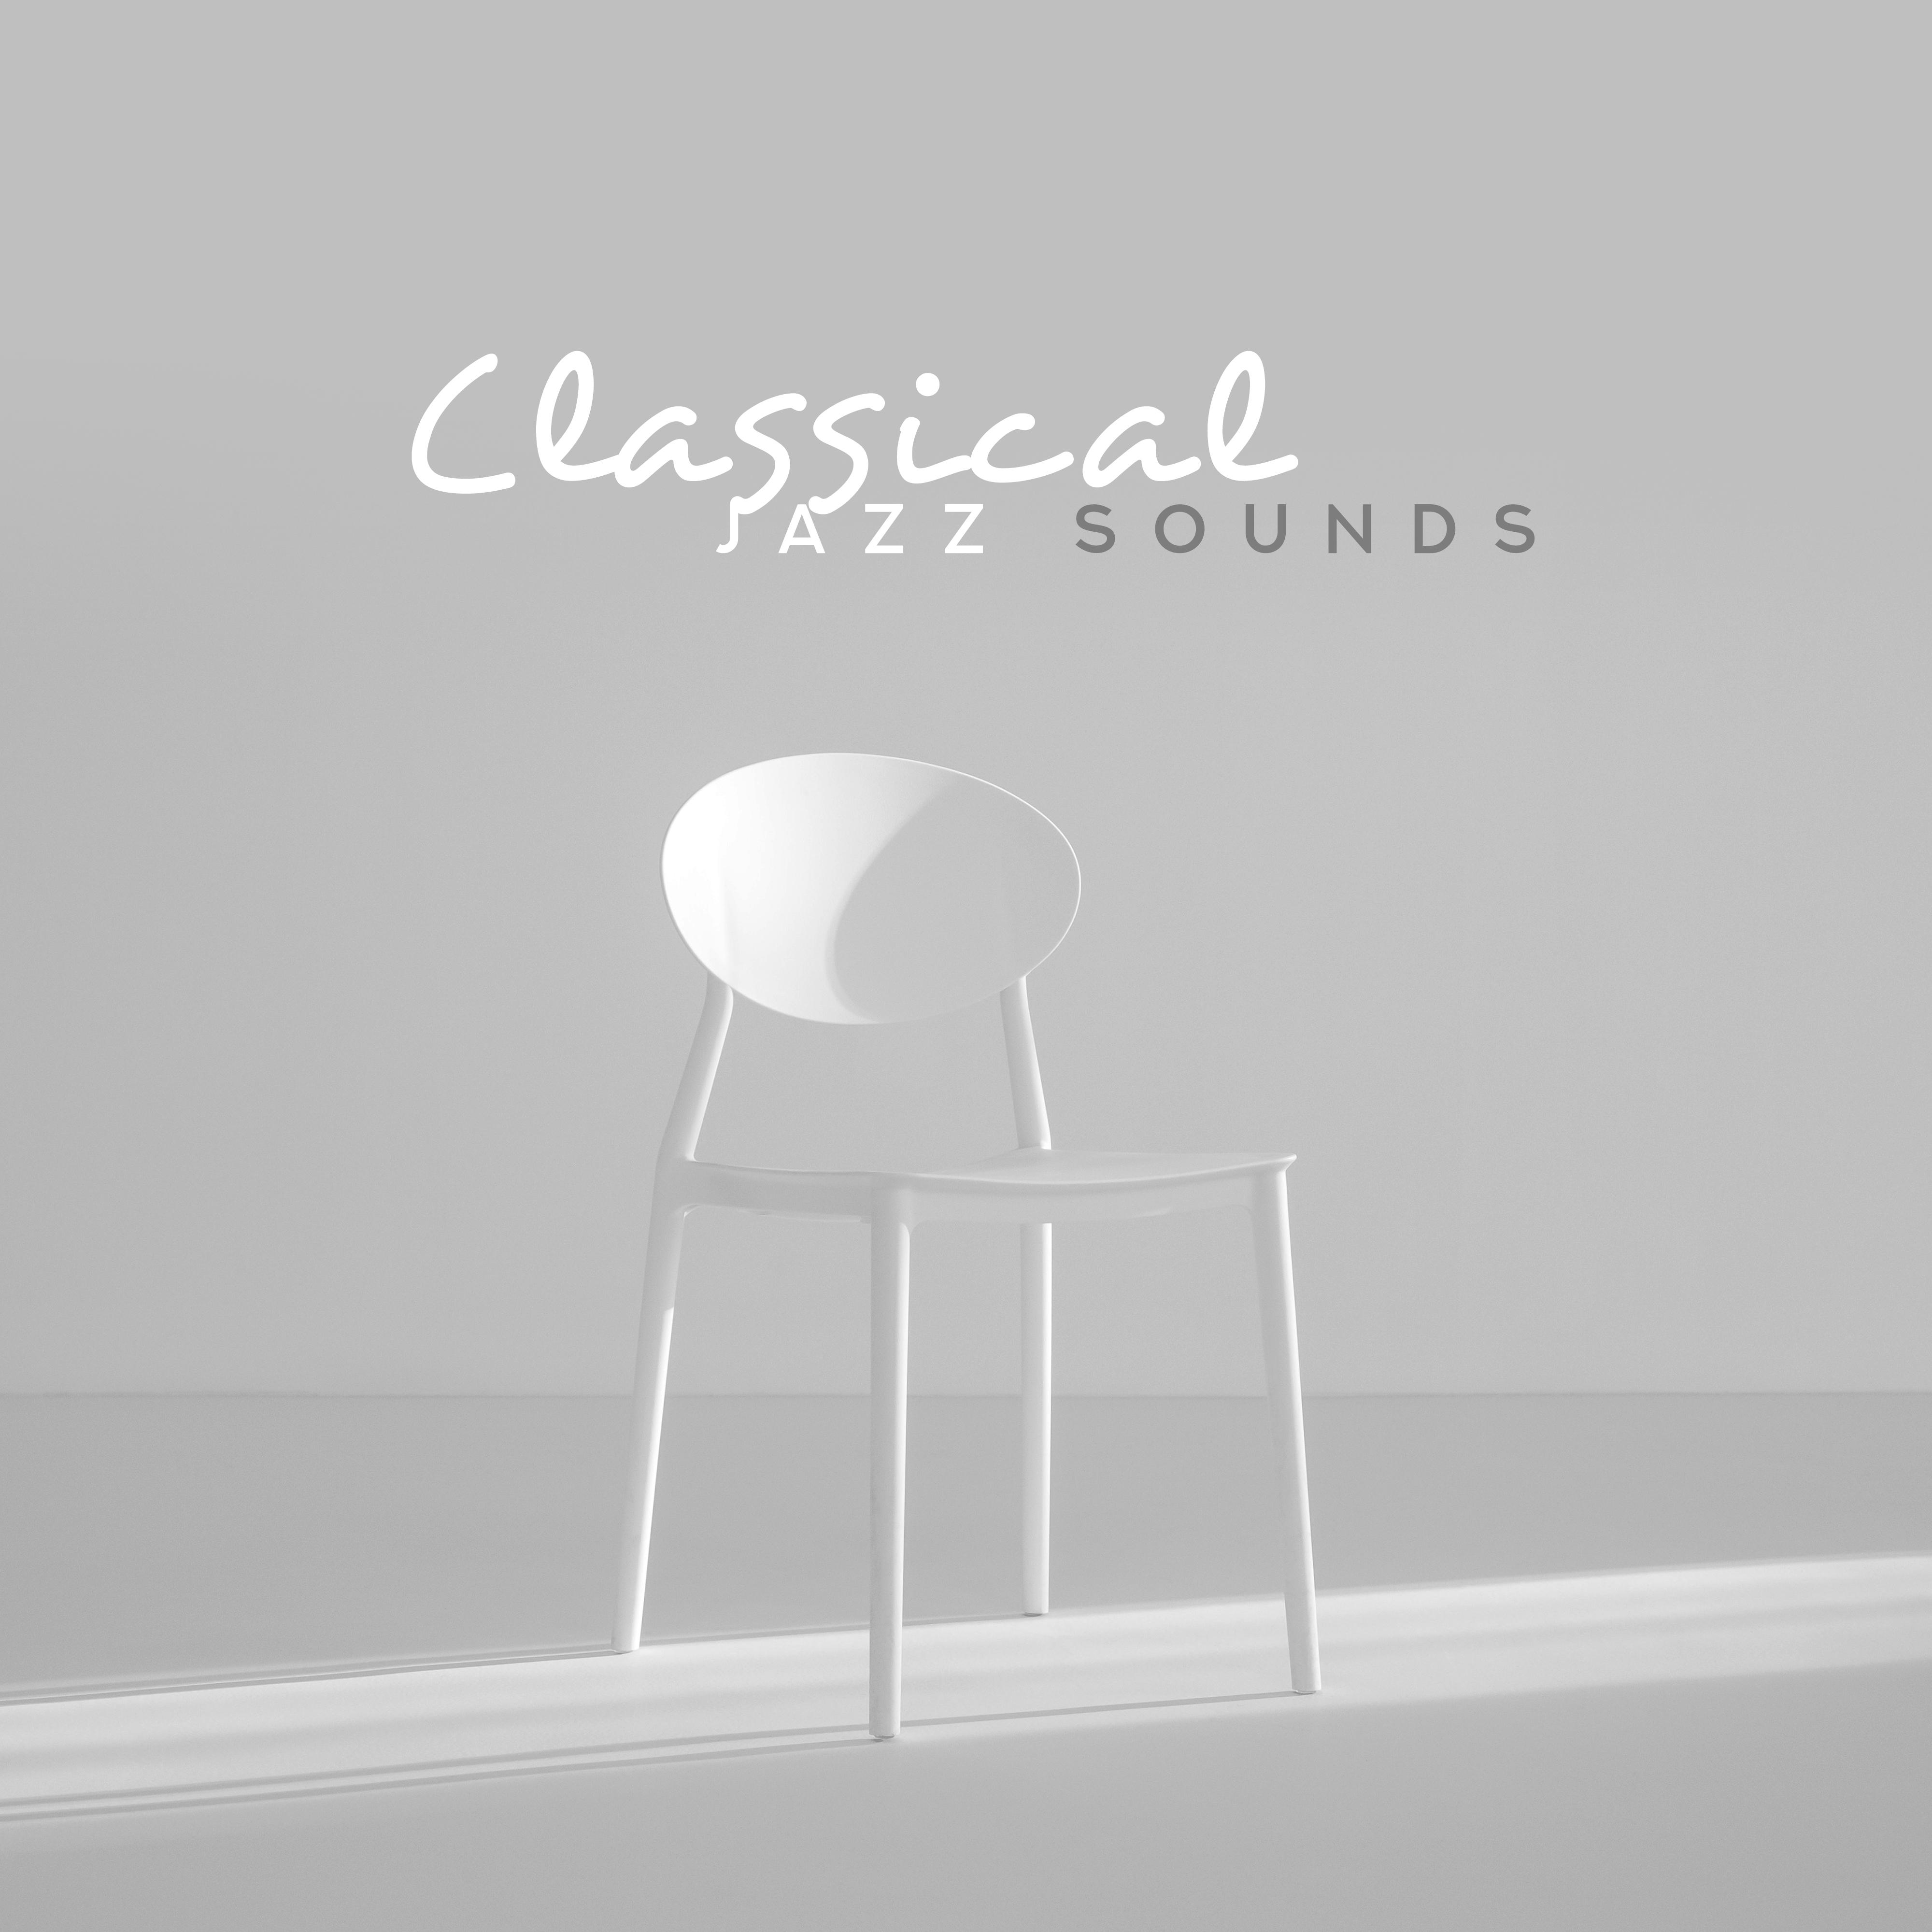 Classical Jazz Sounds  Instrumental Jazz Music Ambient